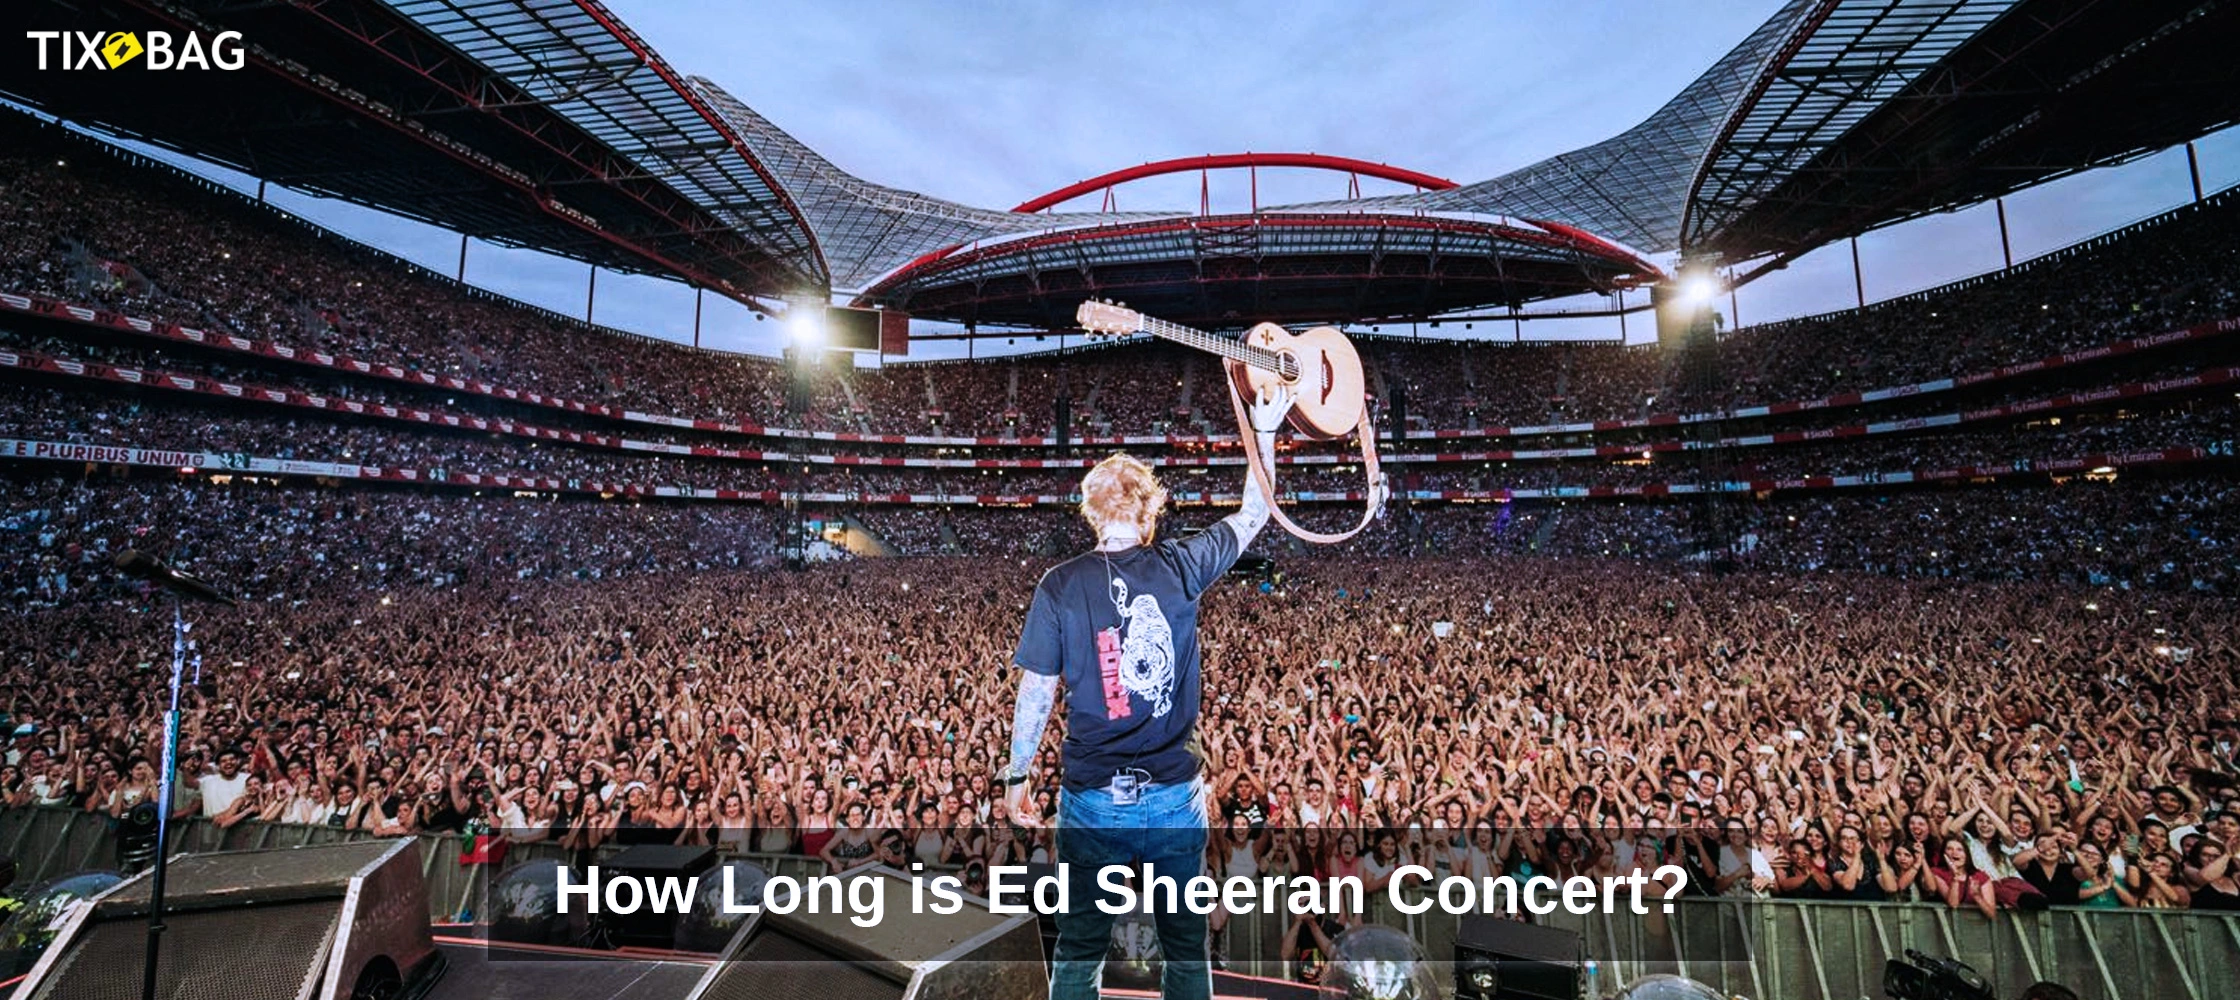 How Long is Ed Sheeran Concert?